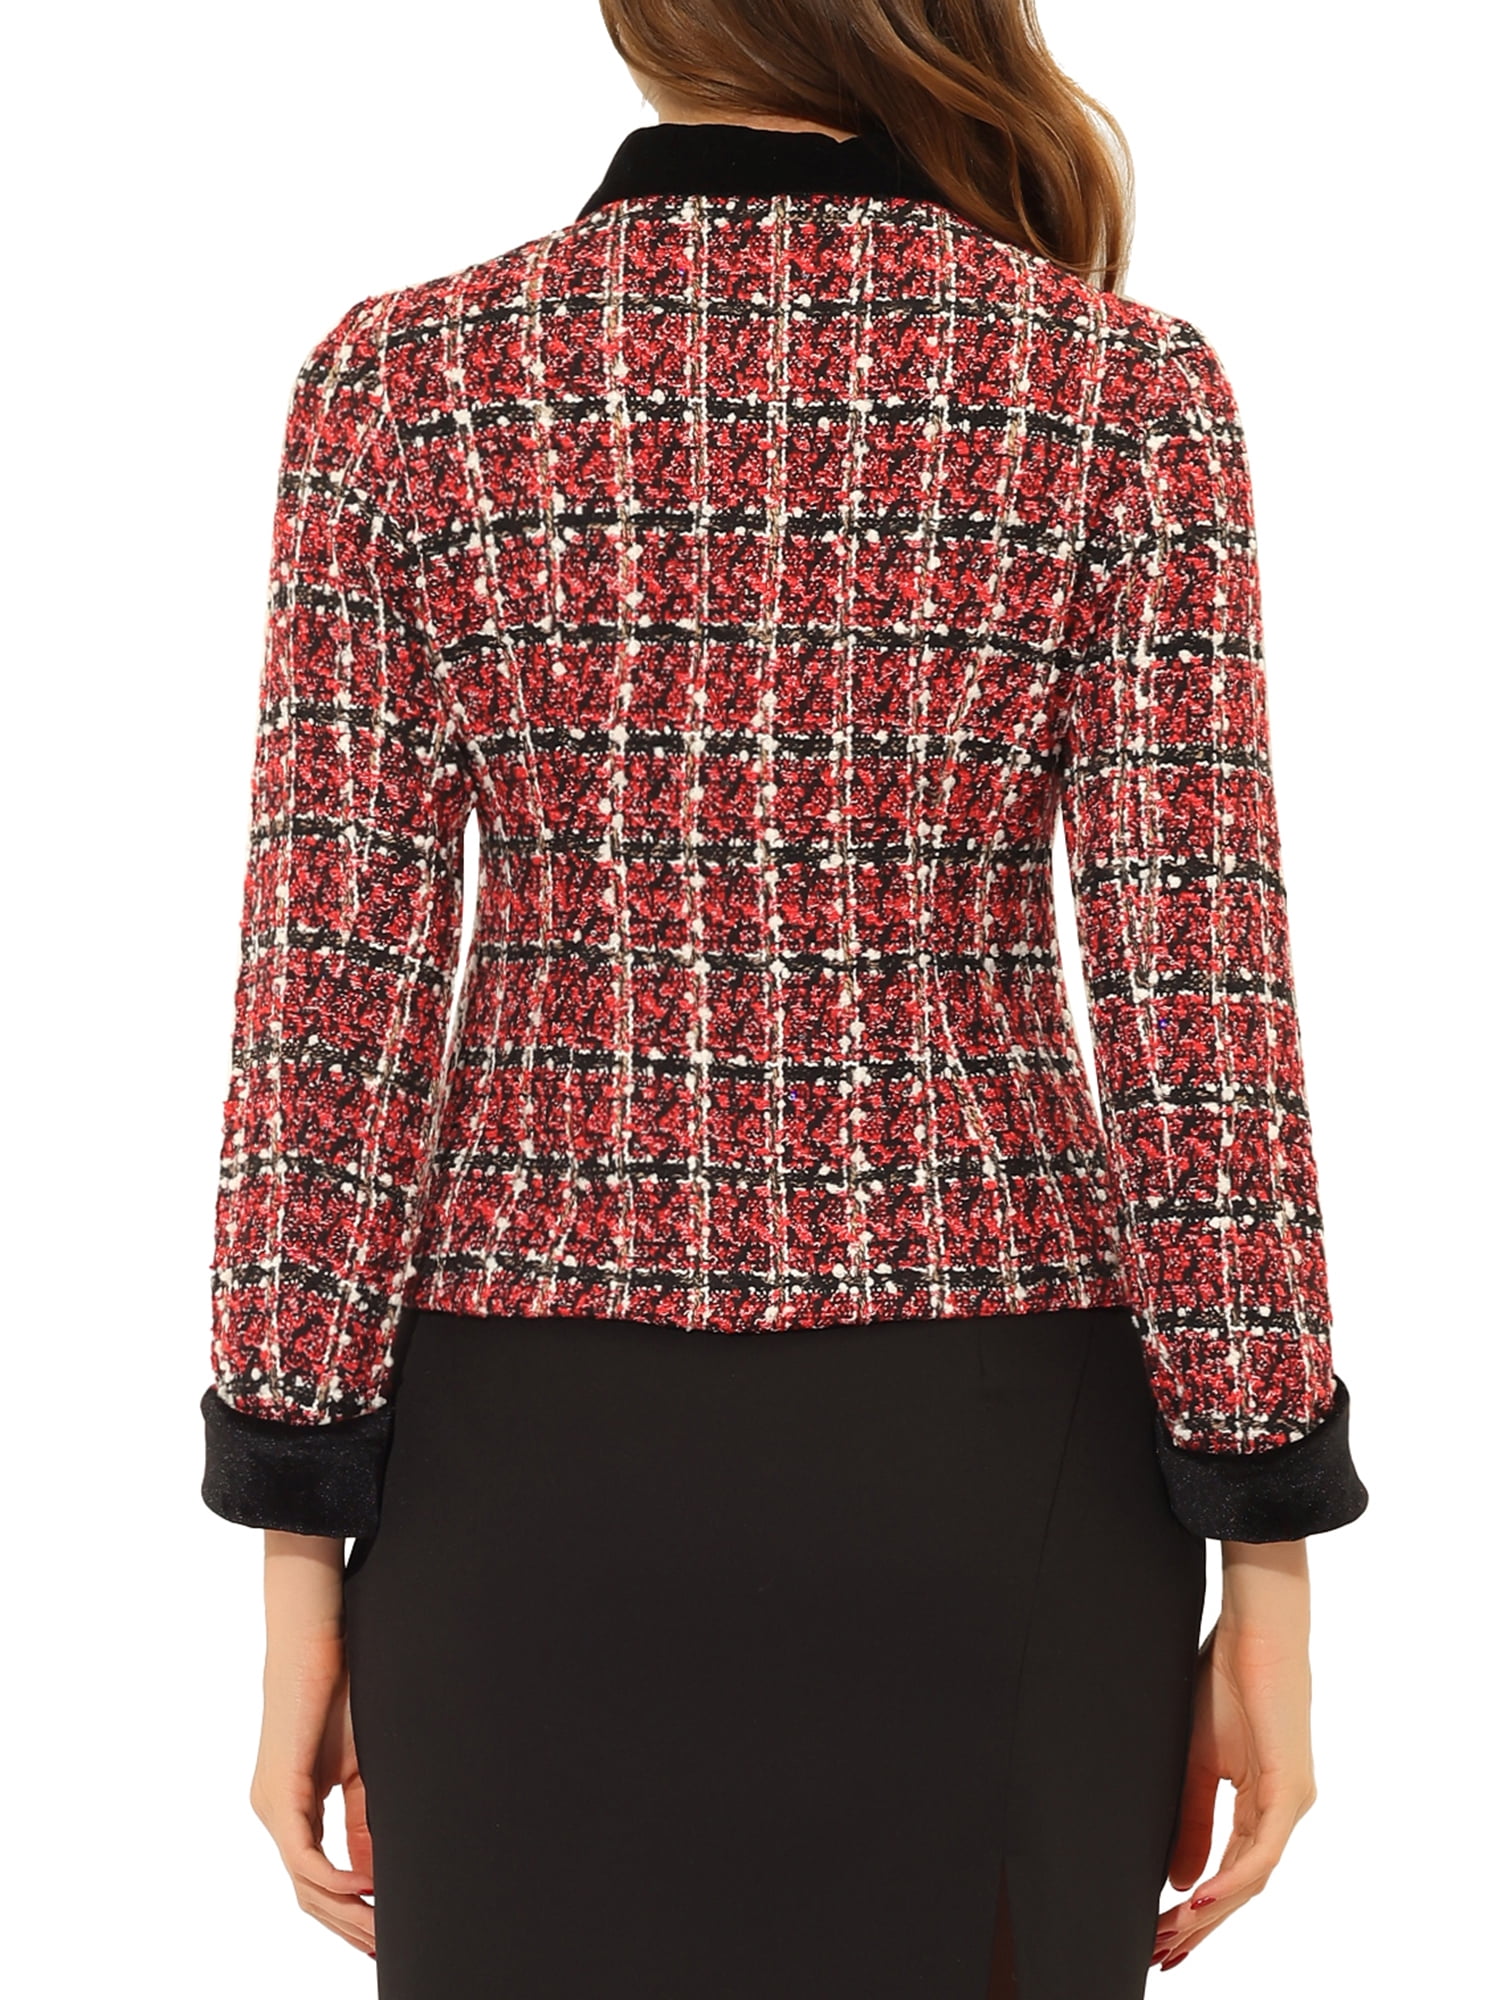 Unique Bargains Women's Plaid Tweed Blazer Long Sleeve Open Front Work  Jacket 